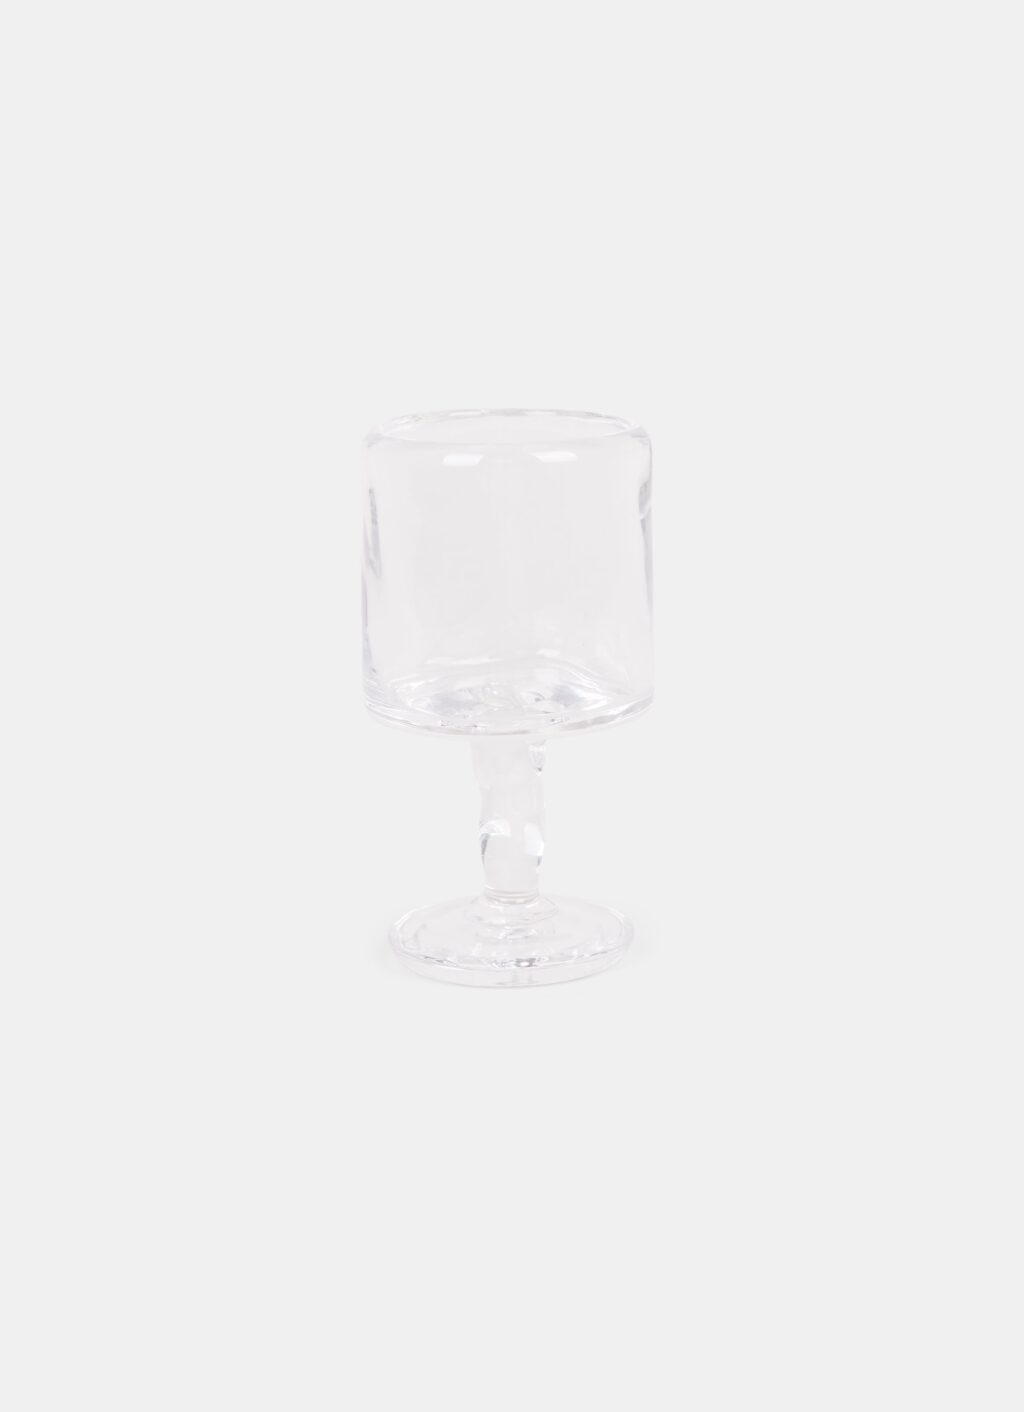 Frama - Studio 0405 - Stem Glass - Limited edition - Medium